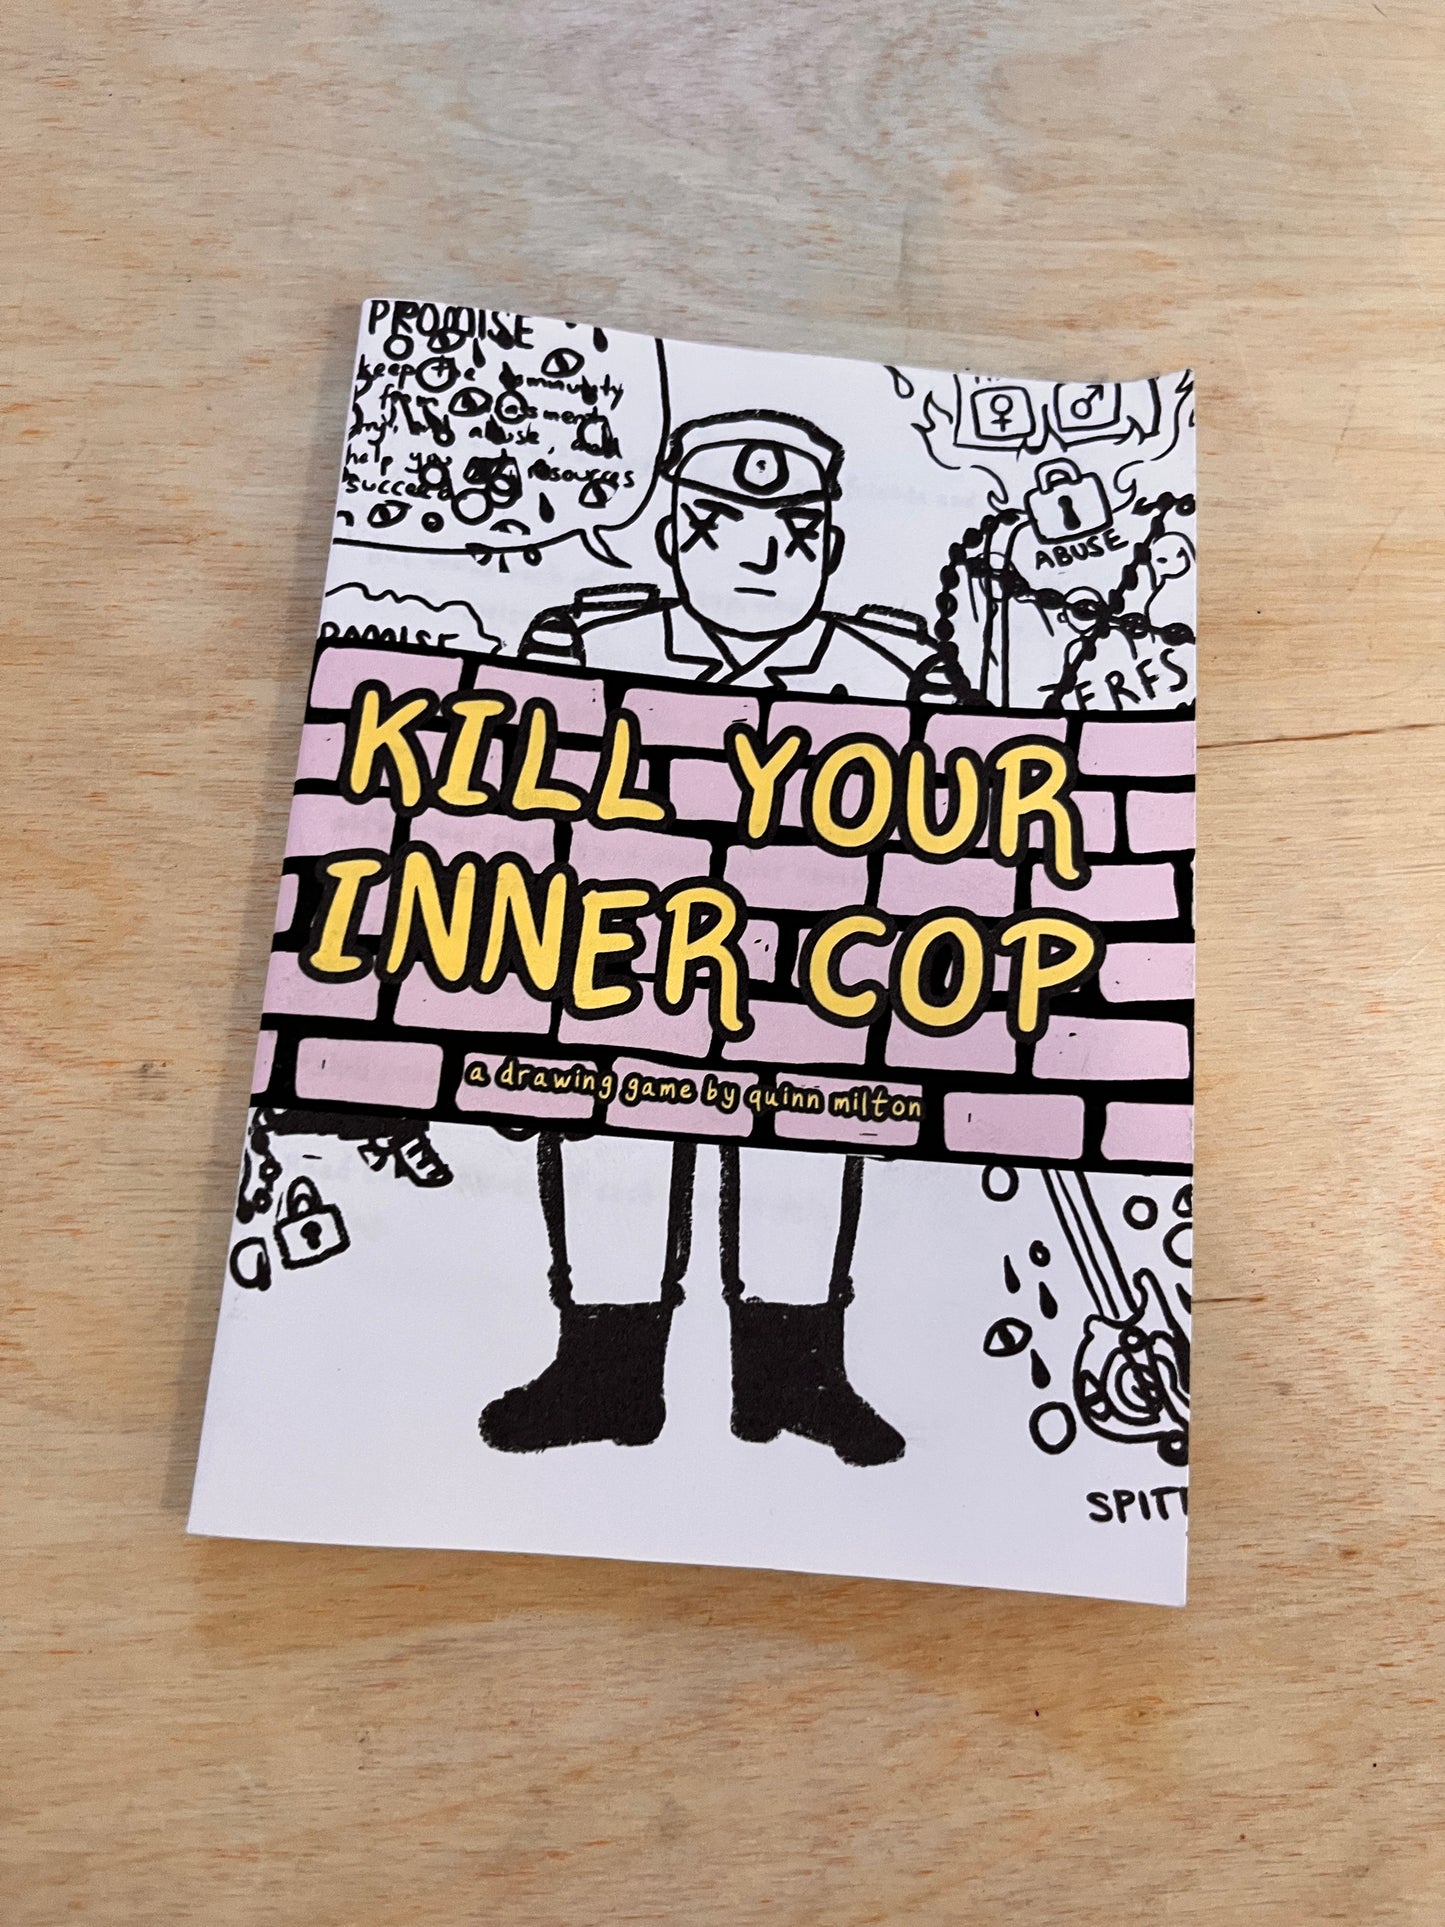 KILL YOUR INNER COP